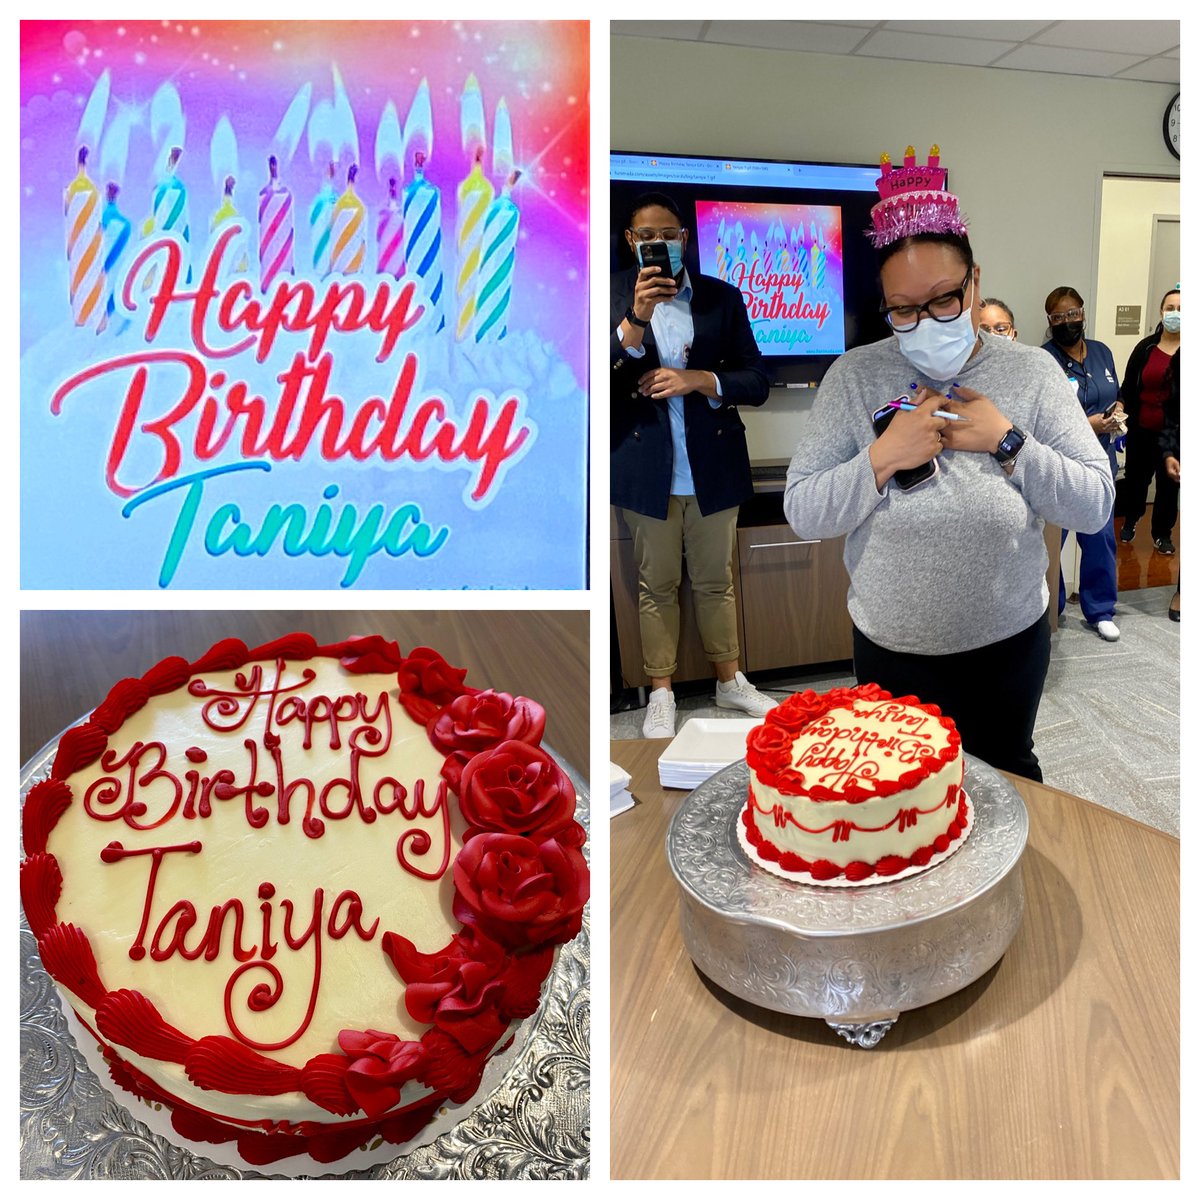 Today we celebrate the awesome and amazing Taniya Wallace on her birthday! @MountSinaiPeds